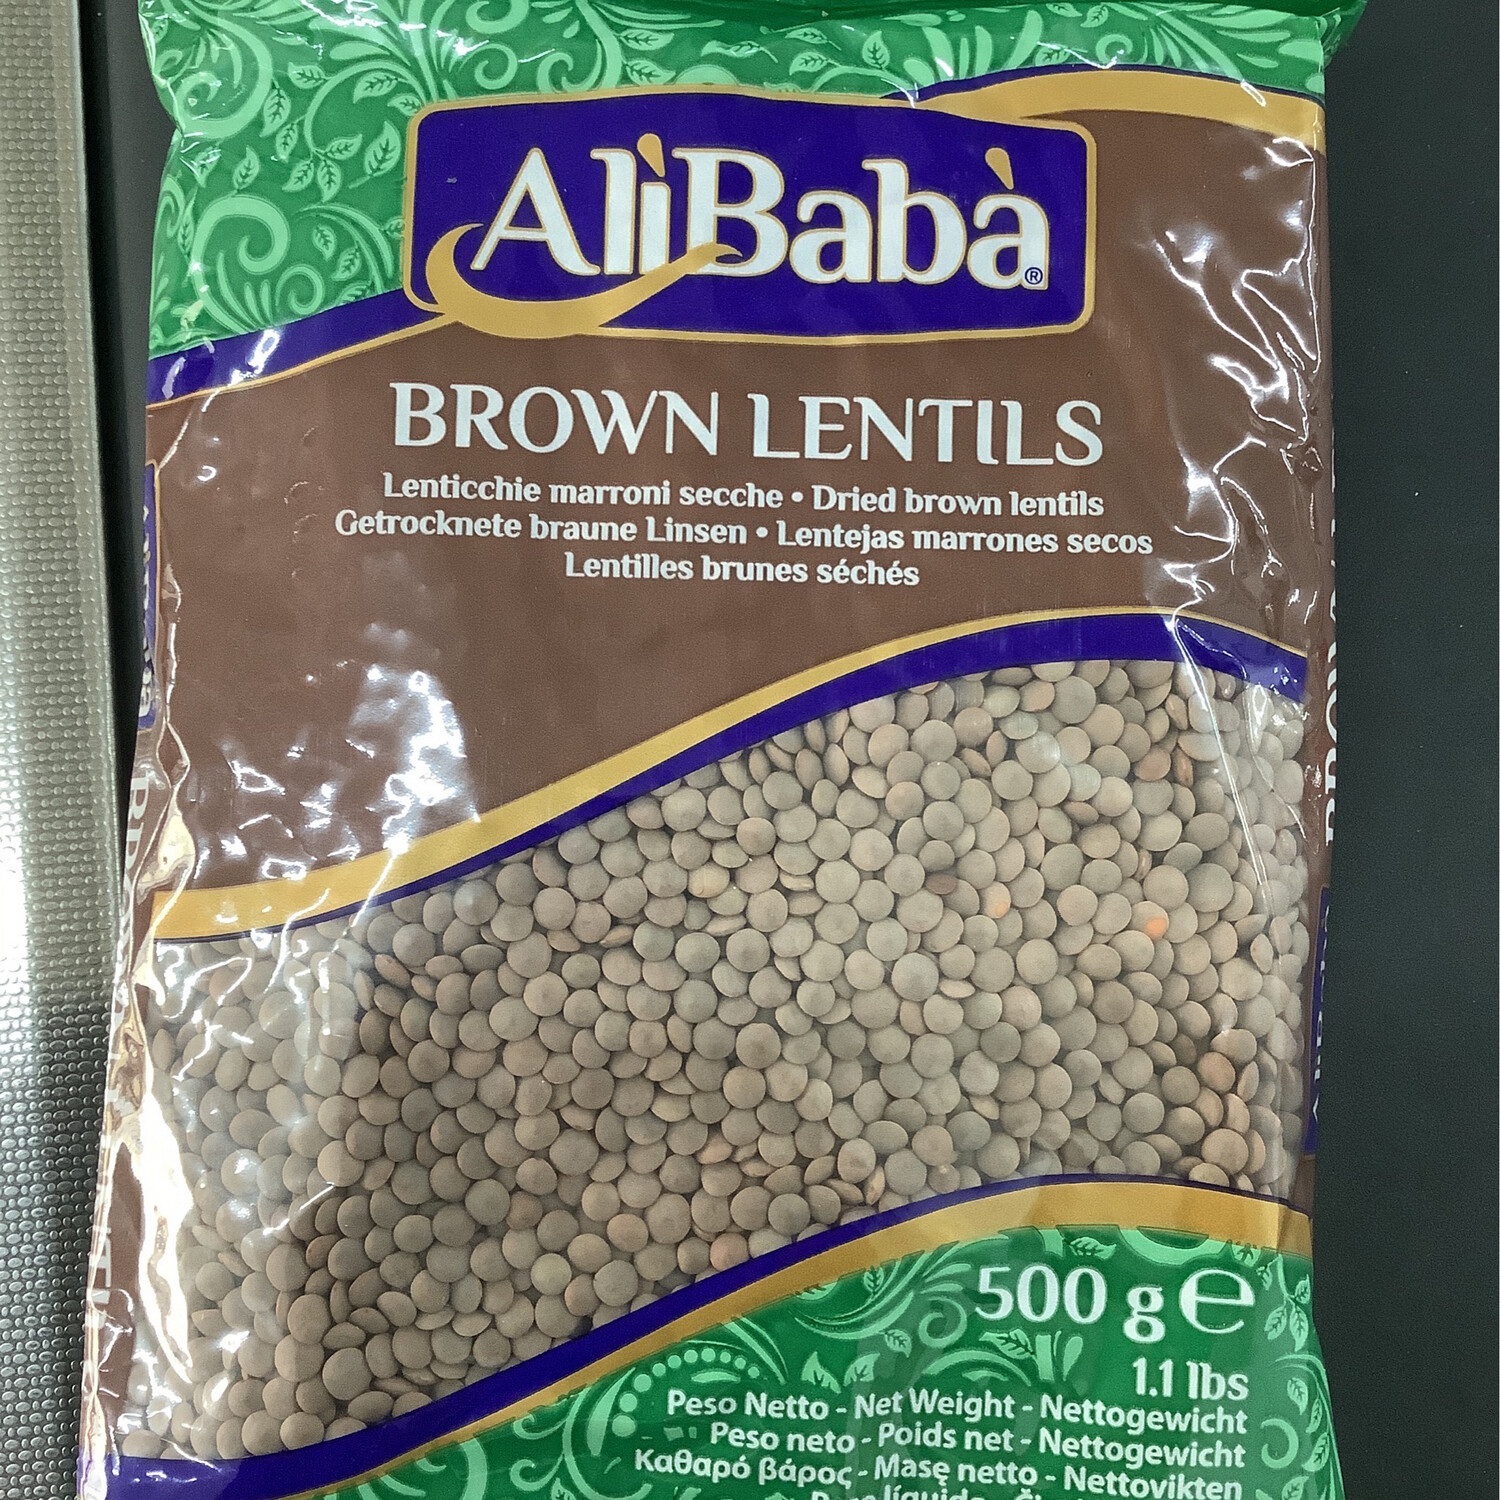 Ali baba brown lentils 500gm